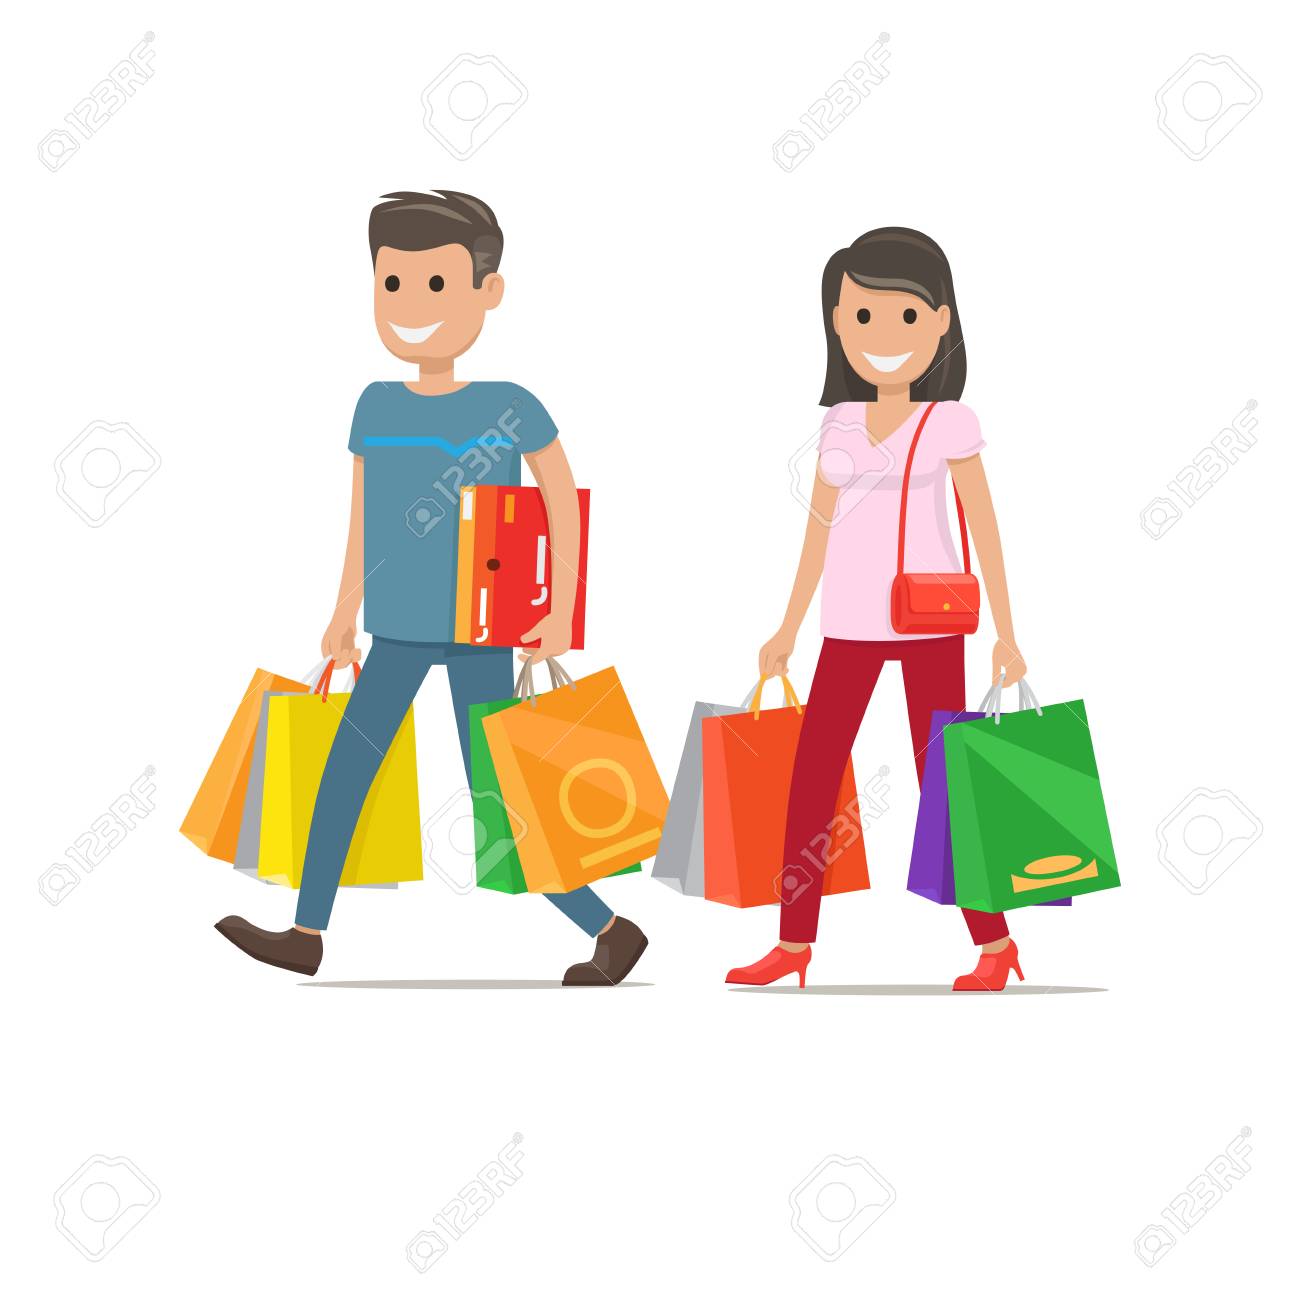 They like to go shopping. Cartoon шоппинг. Шоппинг рисунок. Поход по магазинам. Иллюстрация пара с покупками.